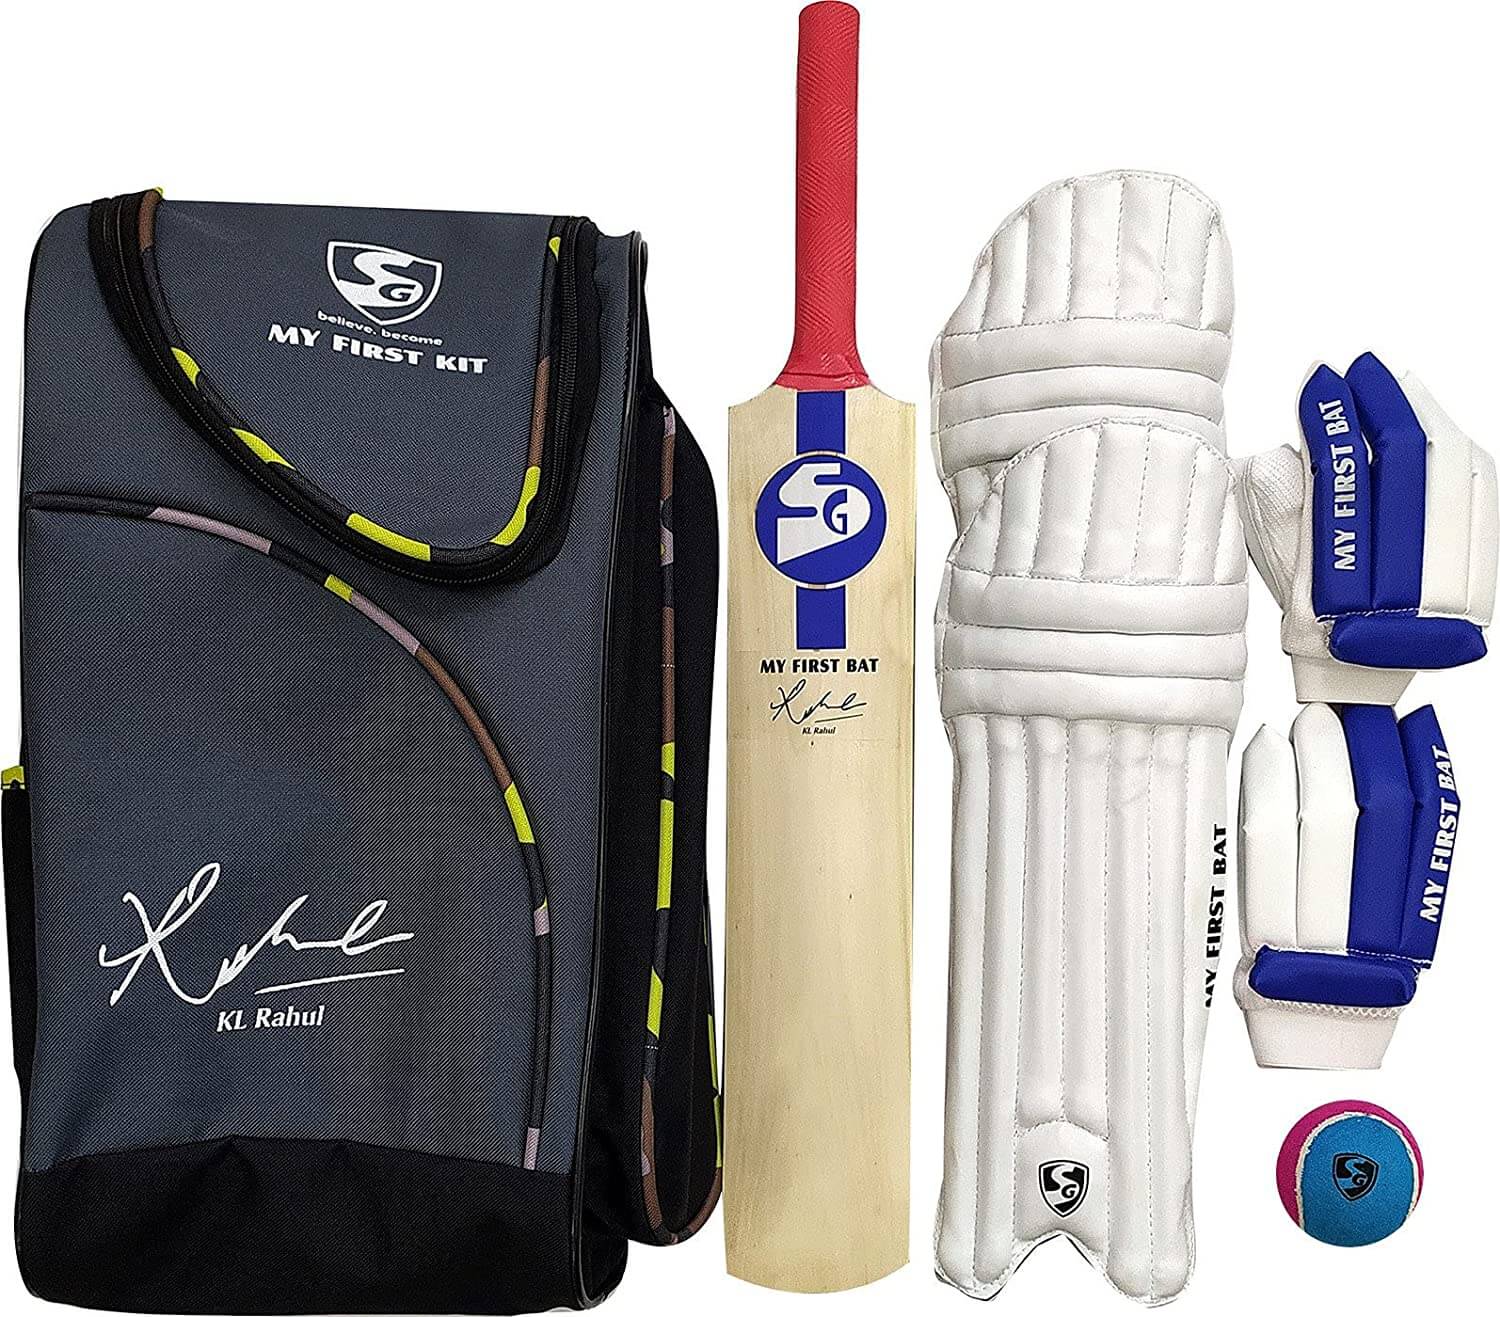 SG My First KIT KL Rahul Signed Cricket Kit